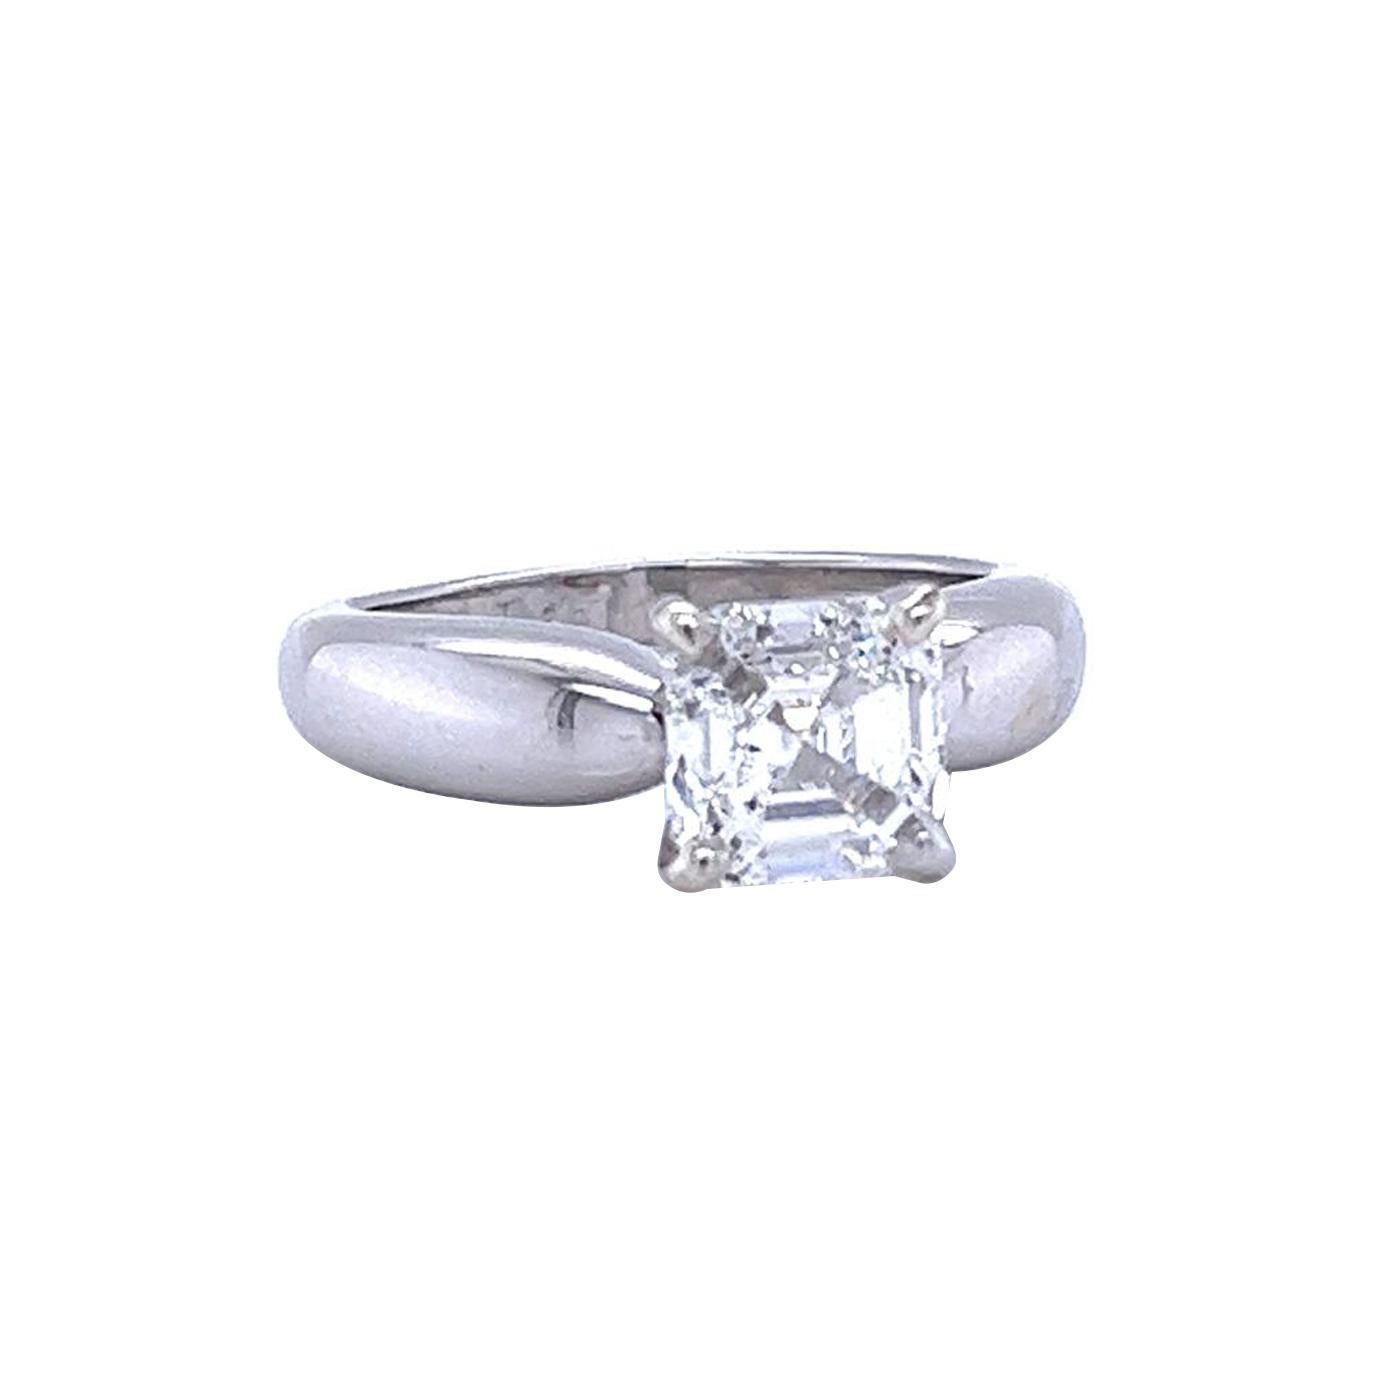 Flawless GIA Certified 2.01 Carat Asscher Cut Diamond Ring 18 Karat White Gold For Sale 2